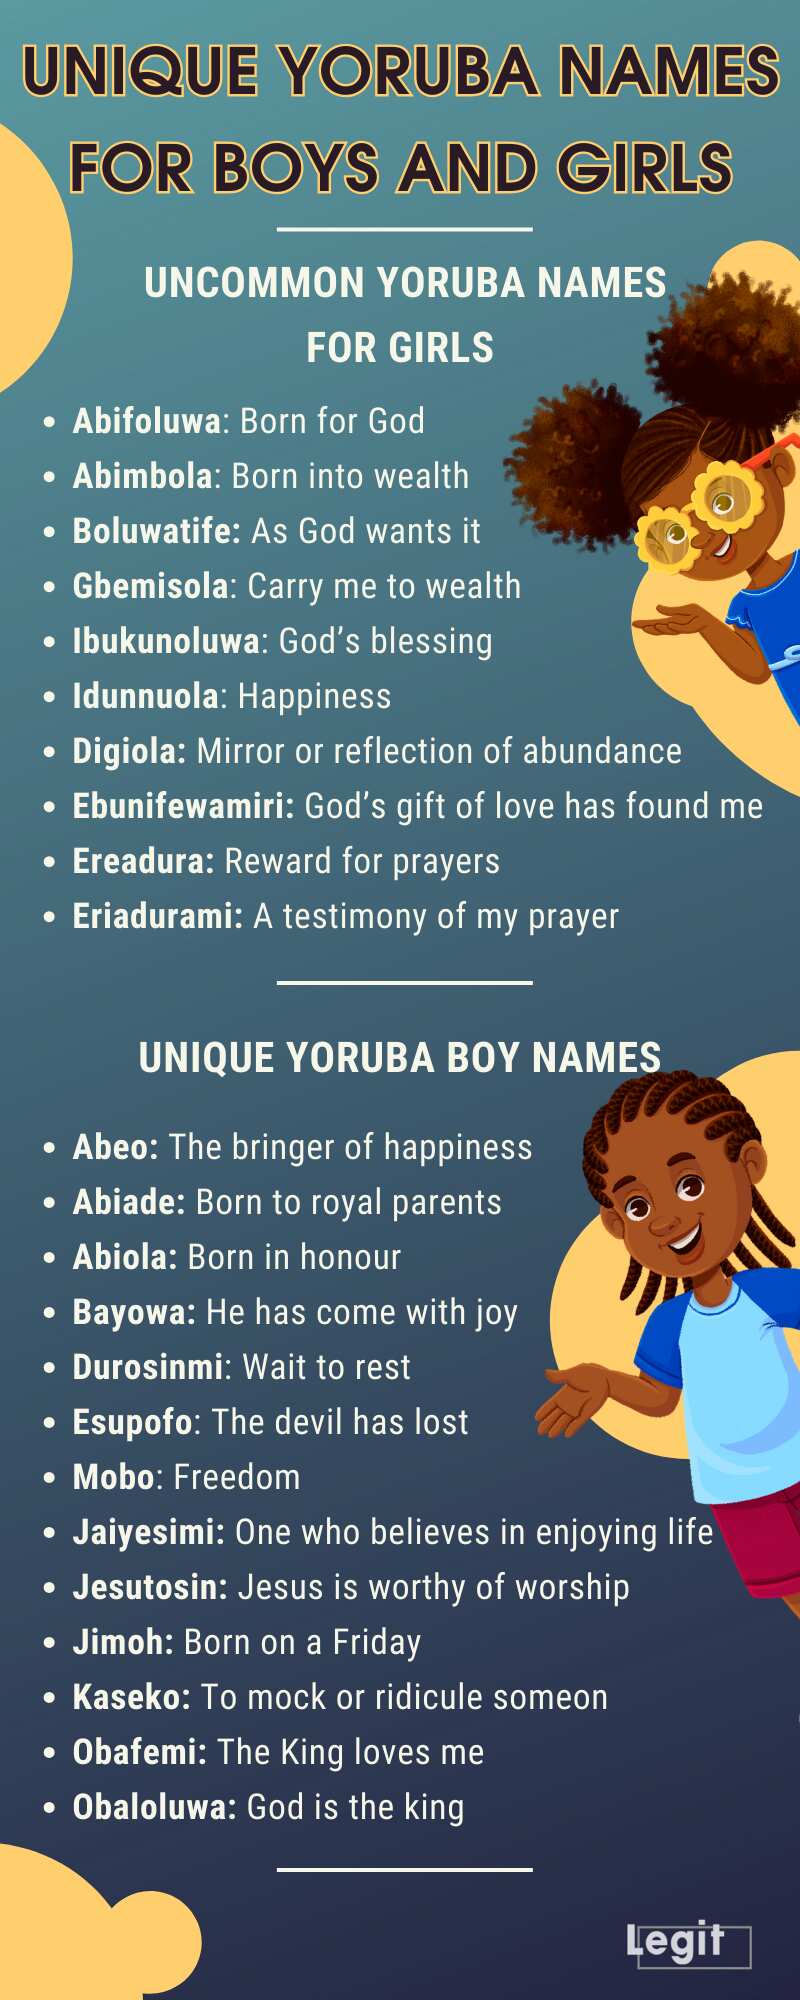 Unique Yoruba names